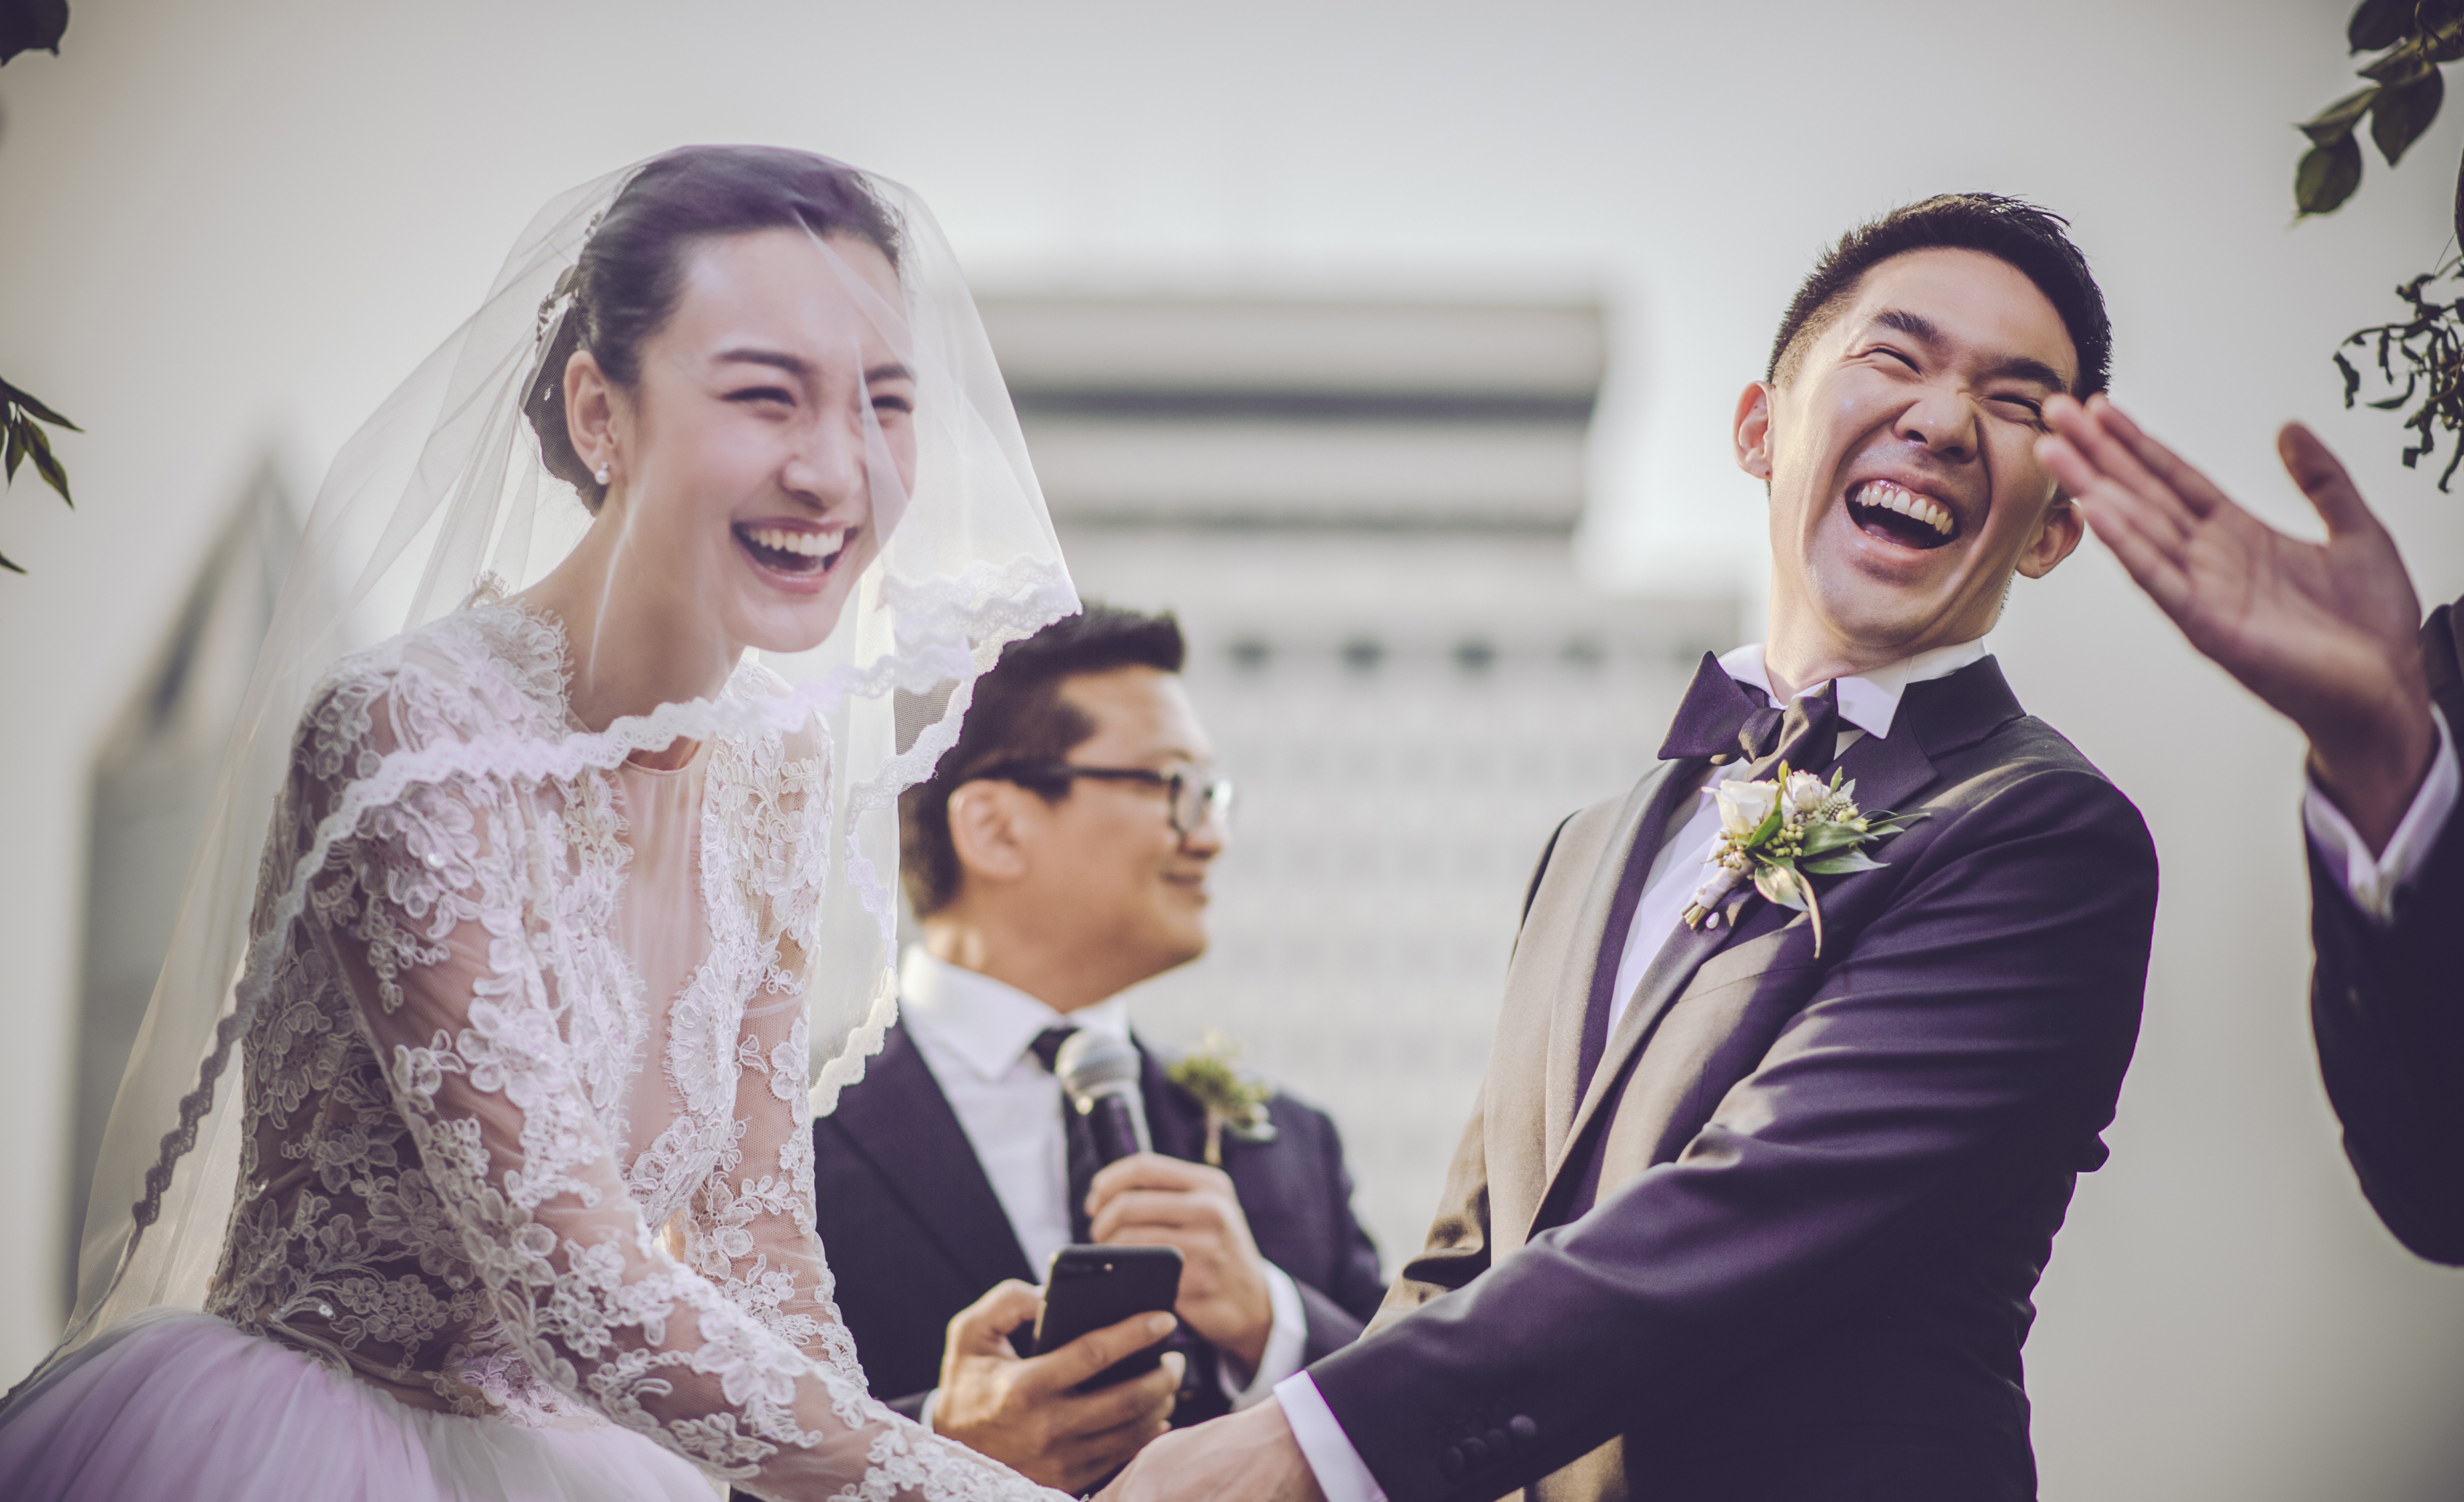 John and Sophia Liu made enjoyment a priority at their wedding.